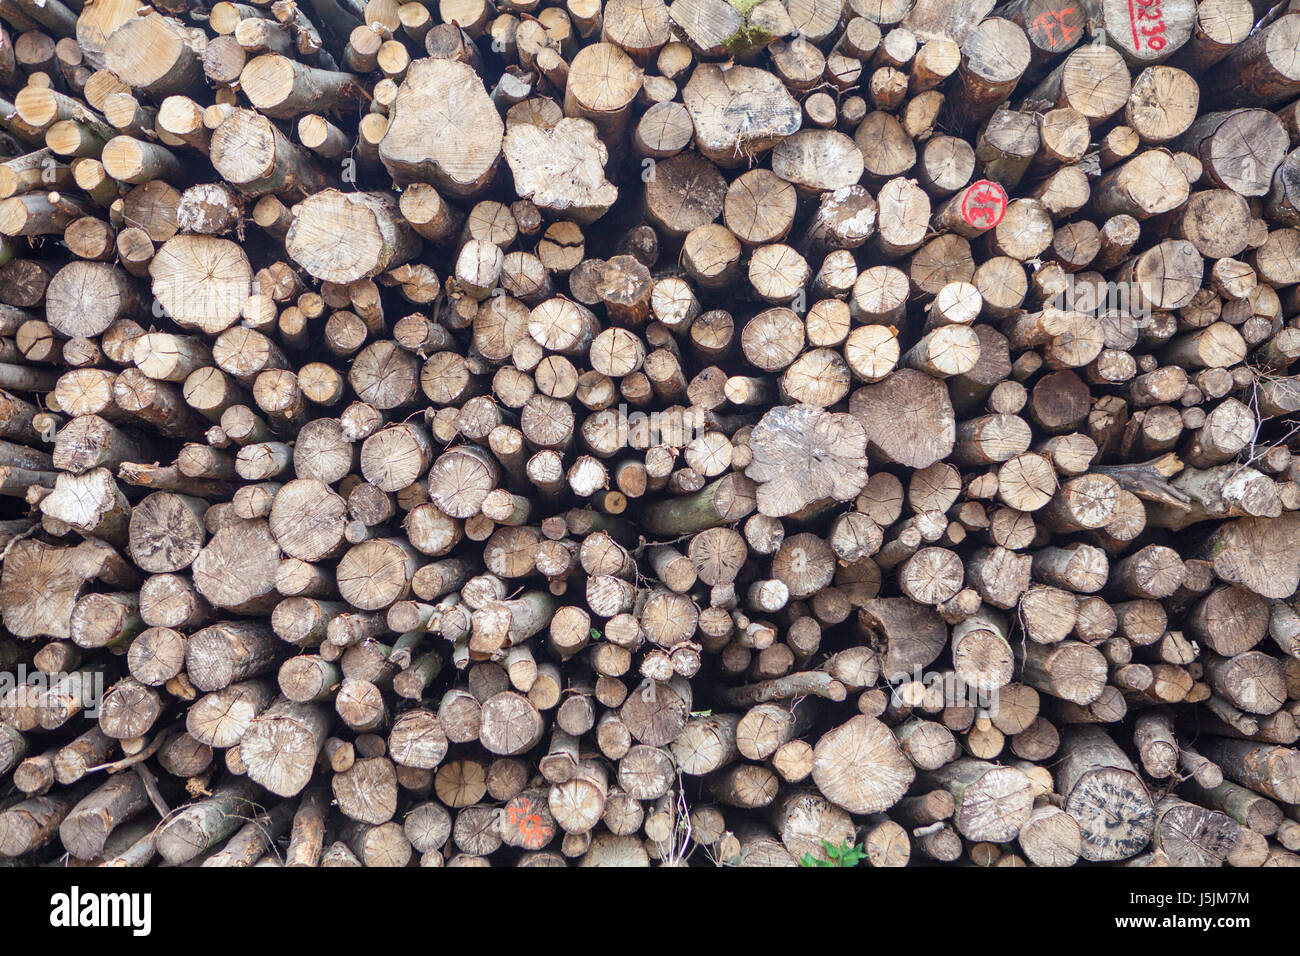 Pile of beech wood, Germany Stock Photo